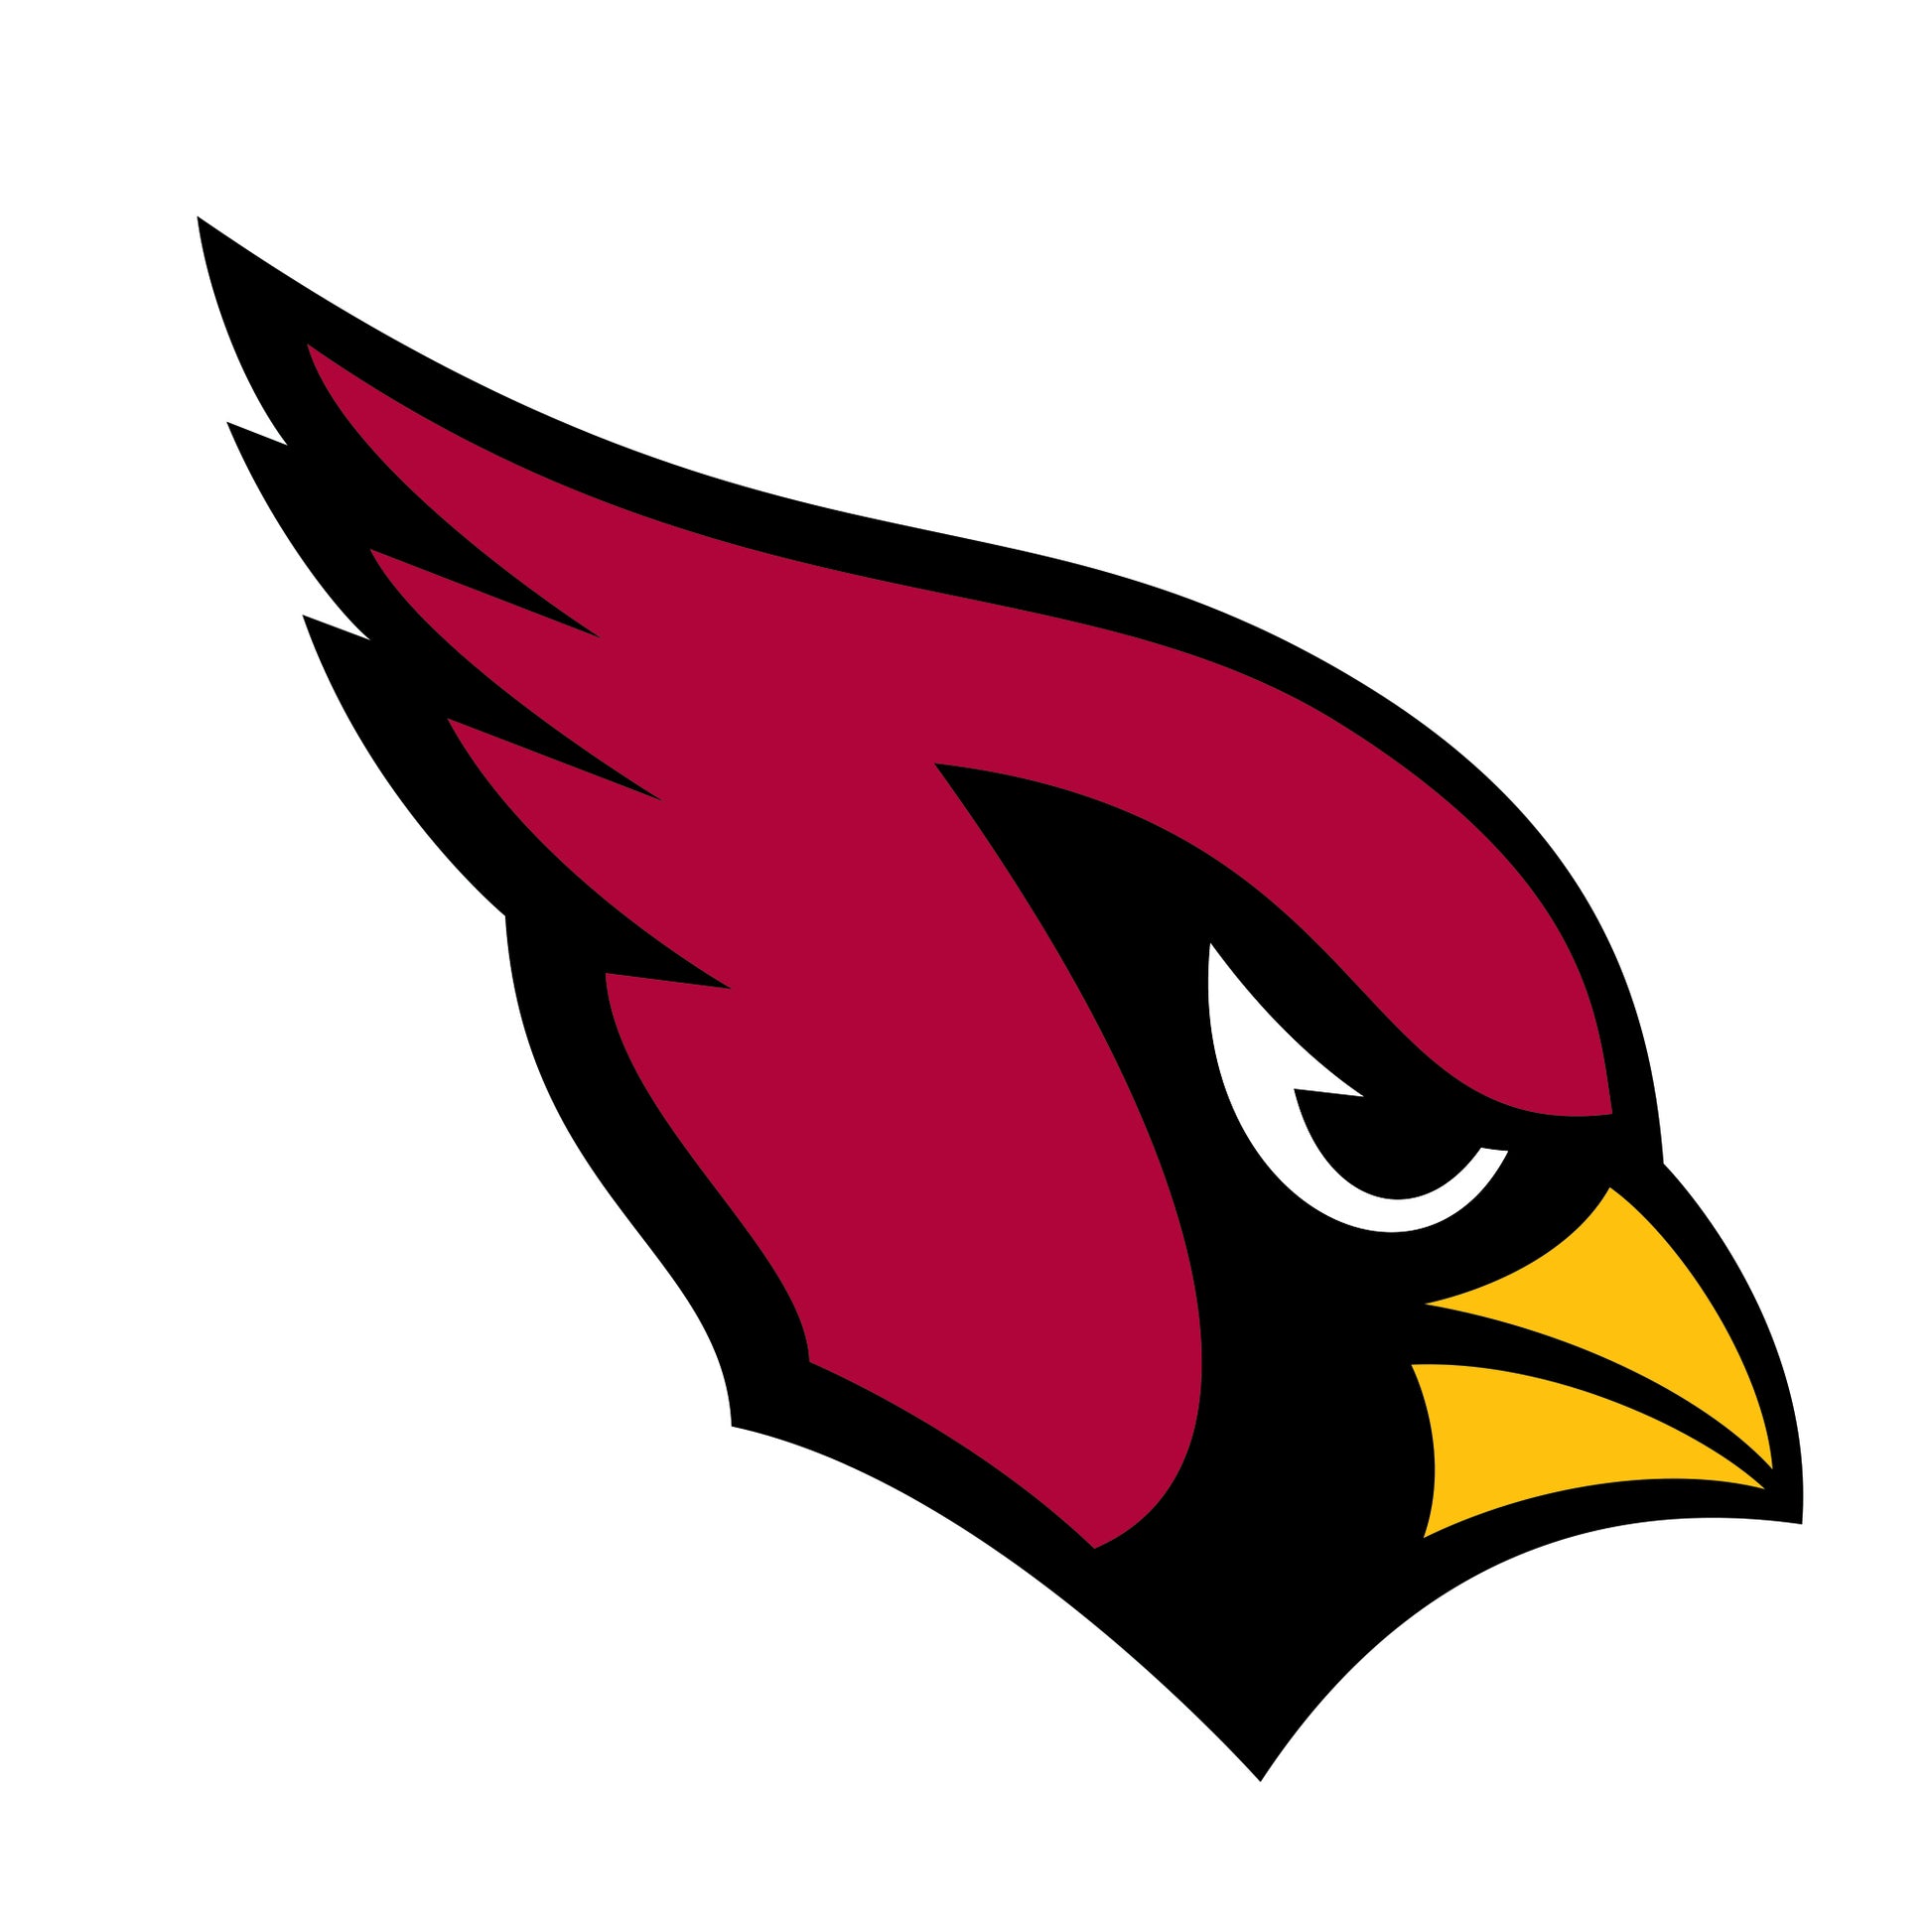 Arizona Cardinals: Alumigraphic Logo - NFL Outdoor Graphic 11W x 11H